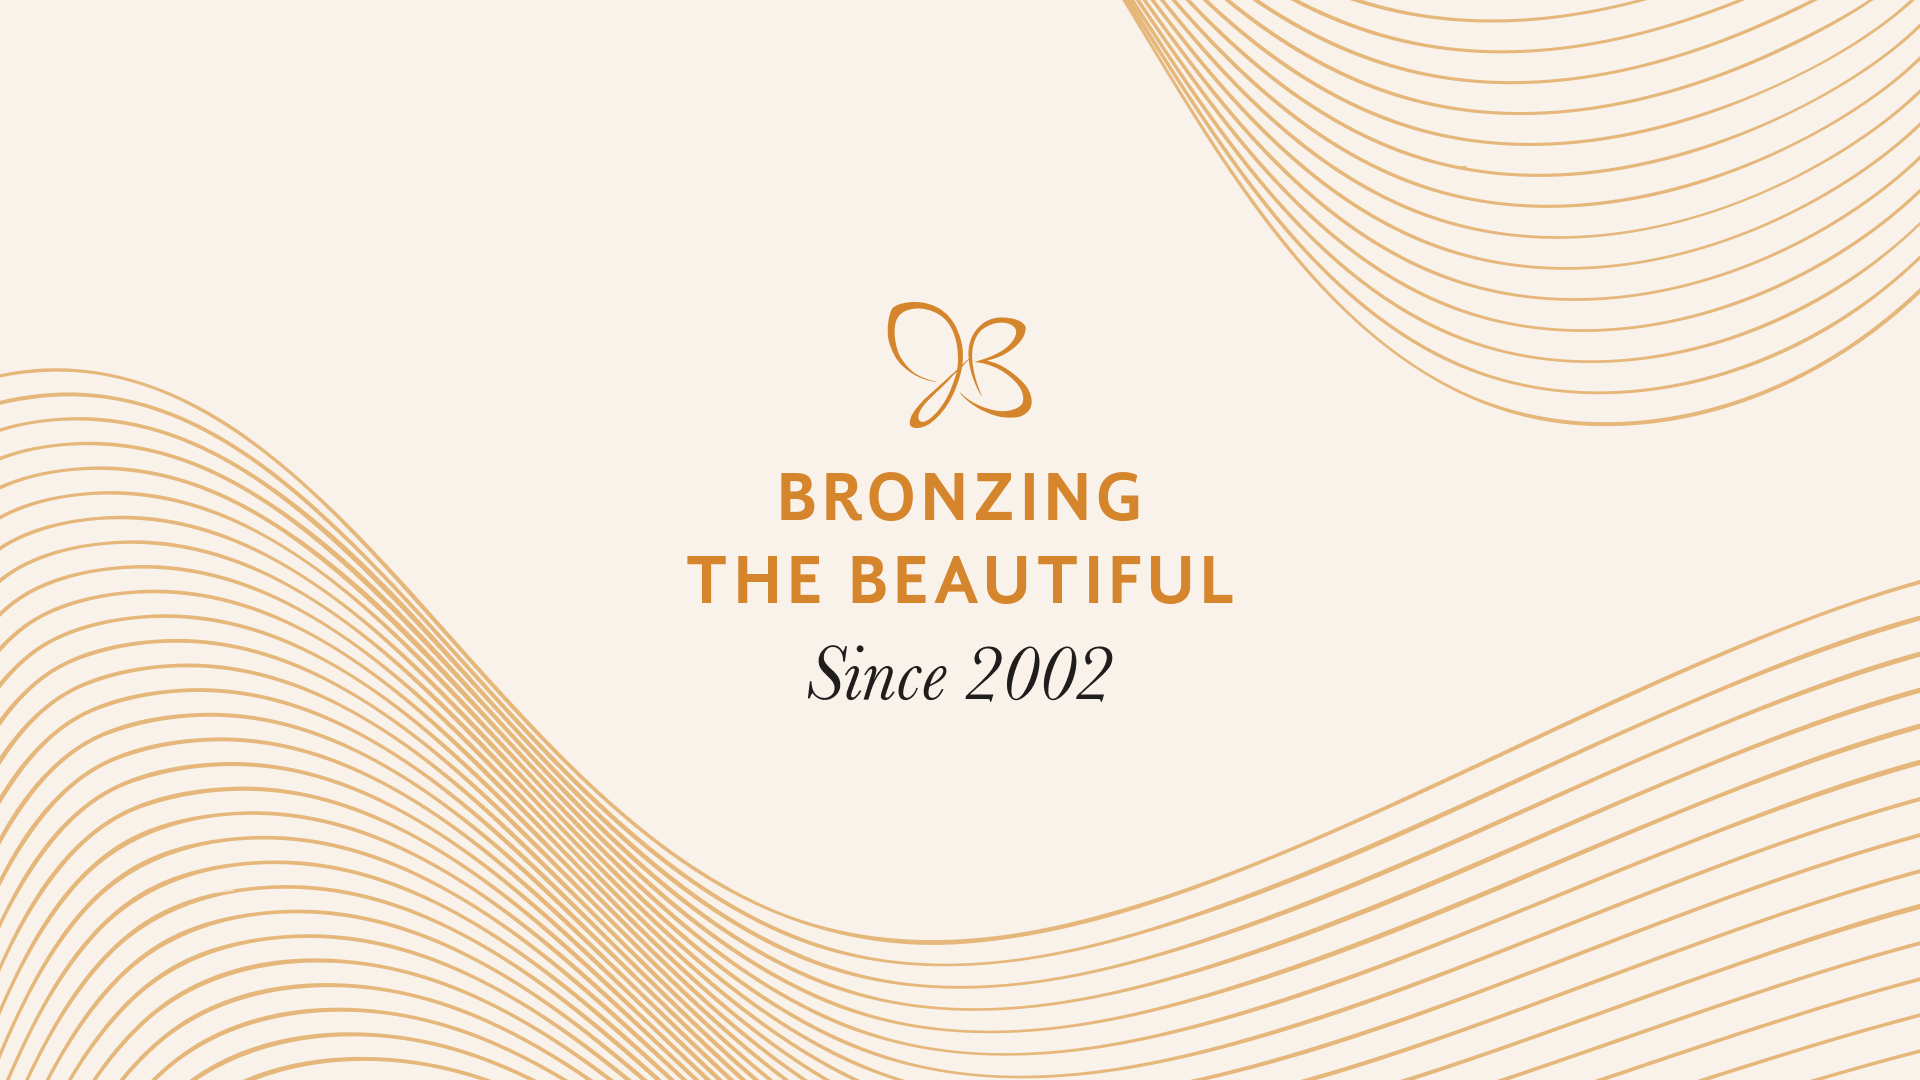 Bronzing the Beautiful since 2002